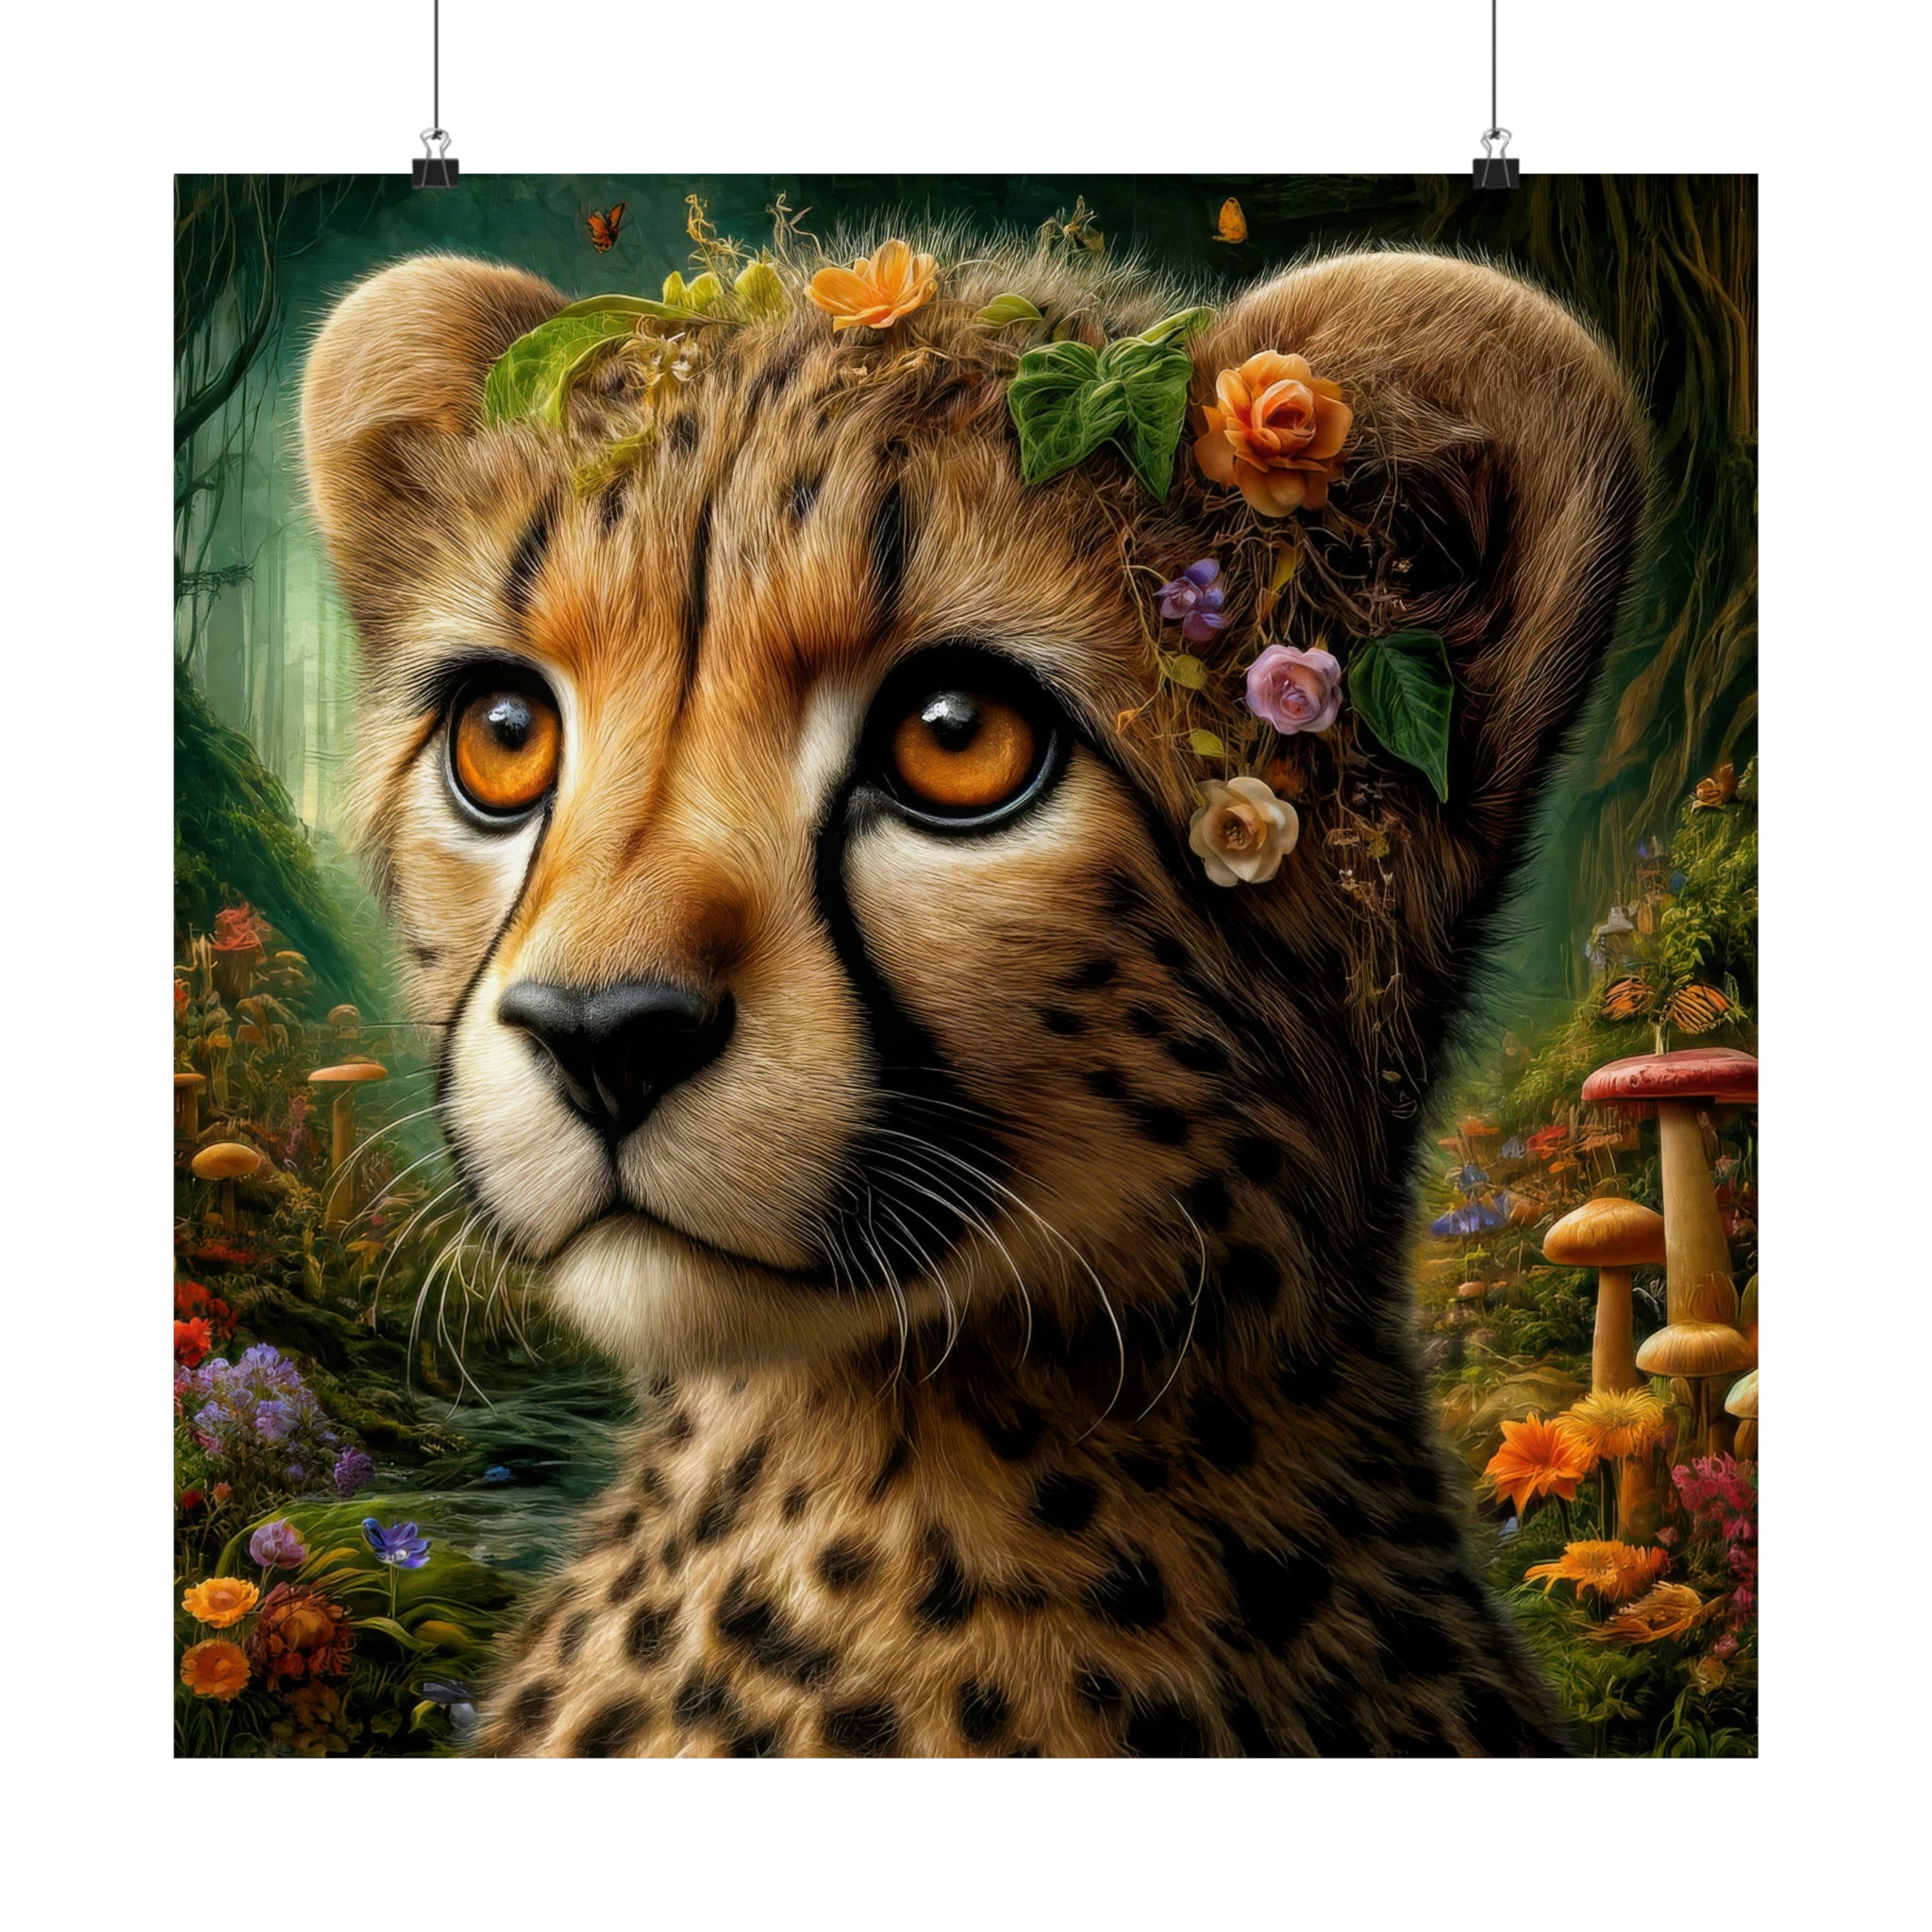 The Cheetah's Blossom Coronet Poster